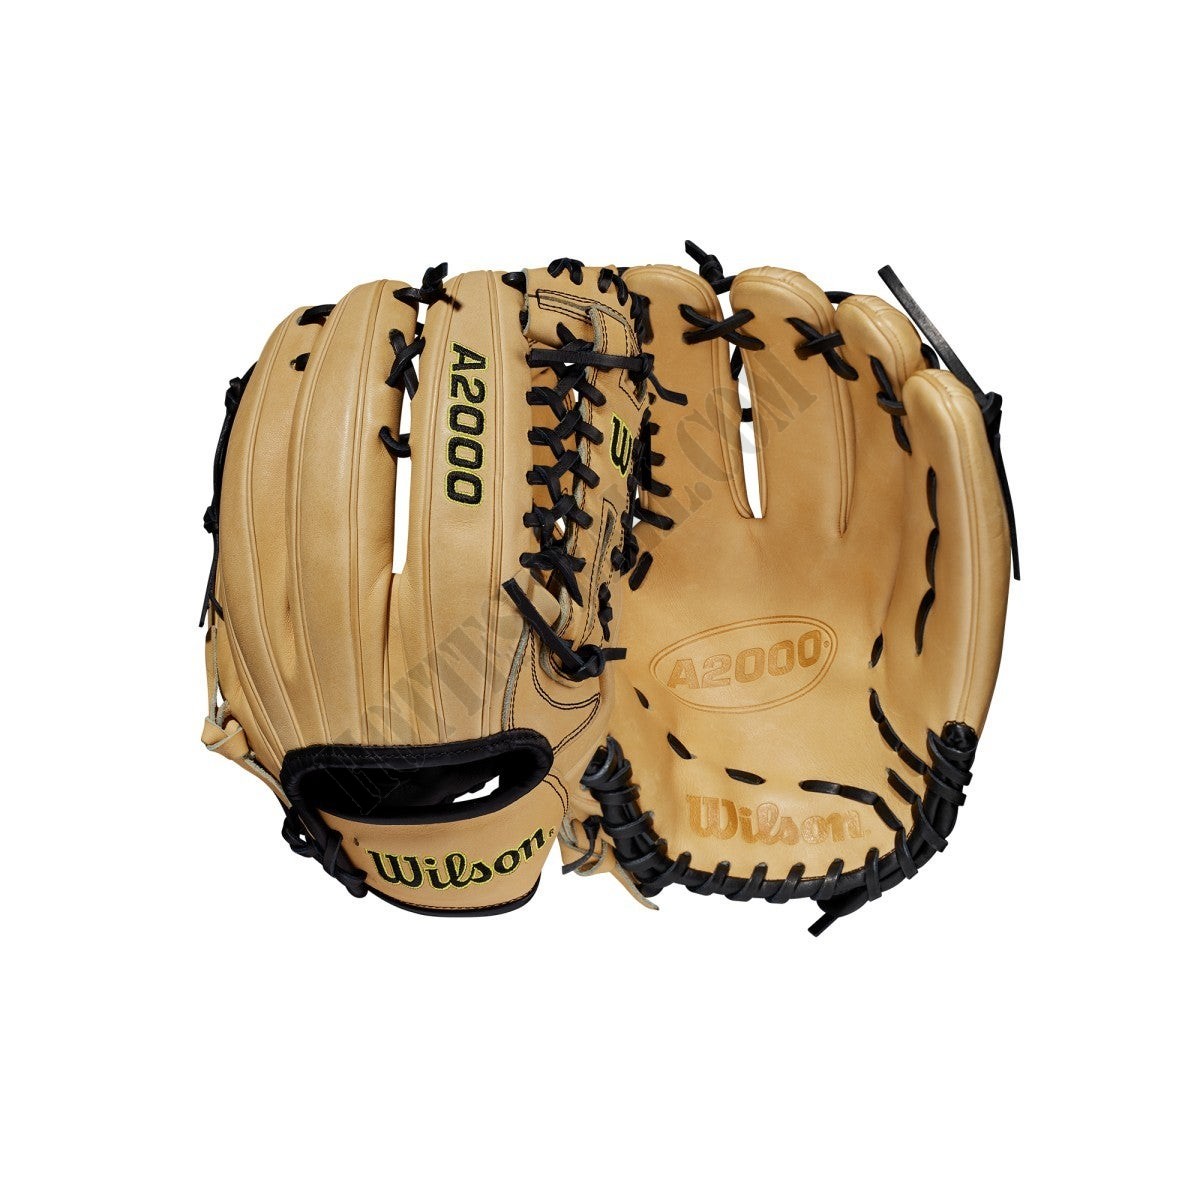 2021 A2000 A12 12" Pitcher's Baseball Glove ● Wilson Promotions - -0